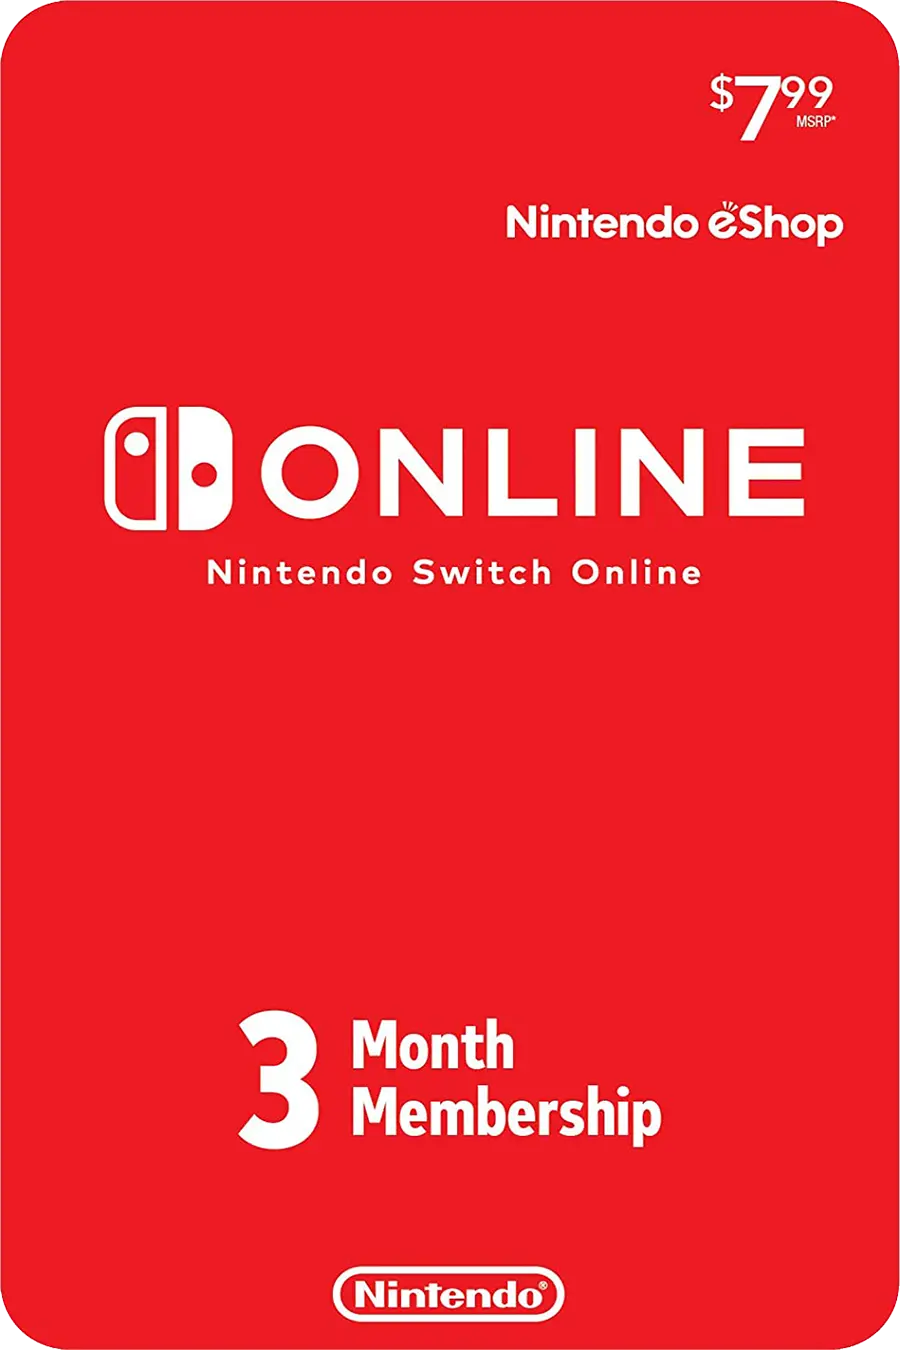 Nintendo Switch Online 3 Months Individual Membership (US) - Digital Code